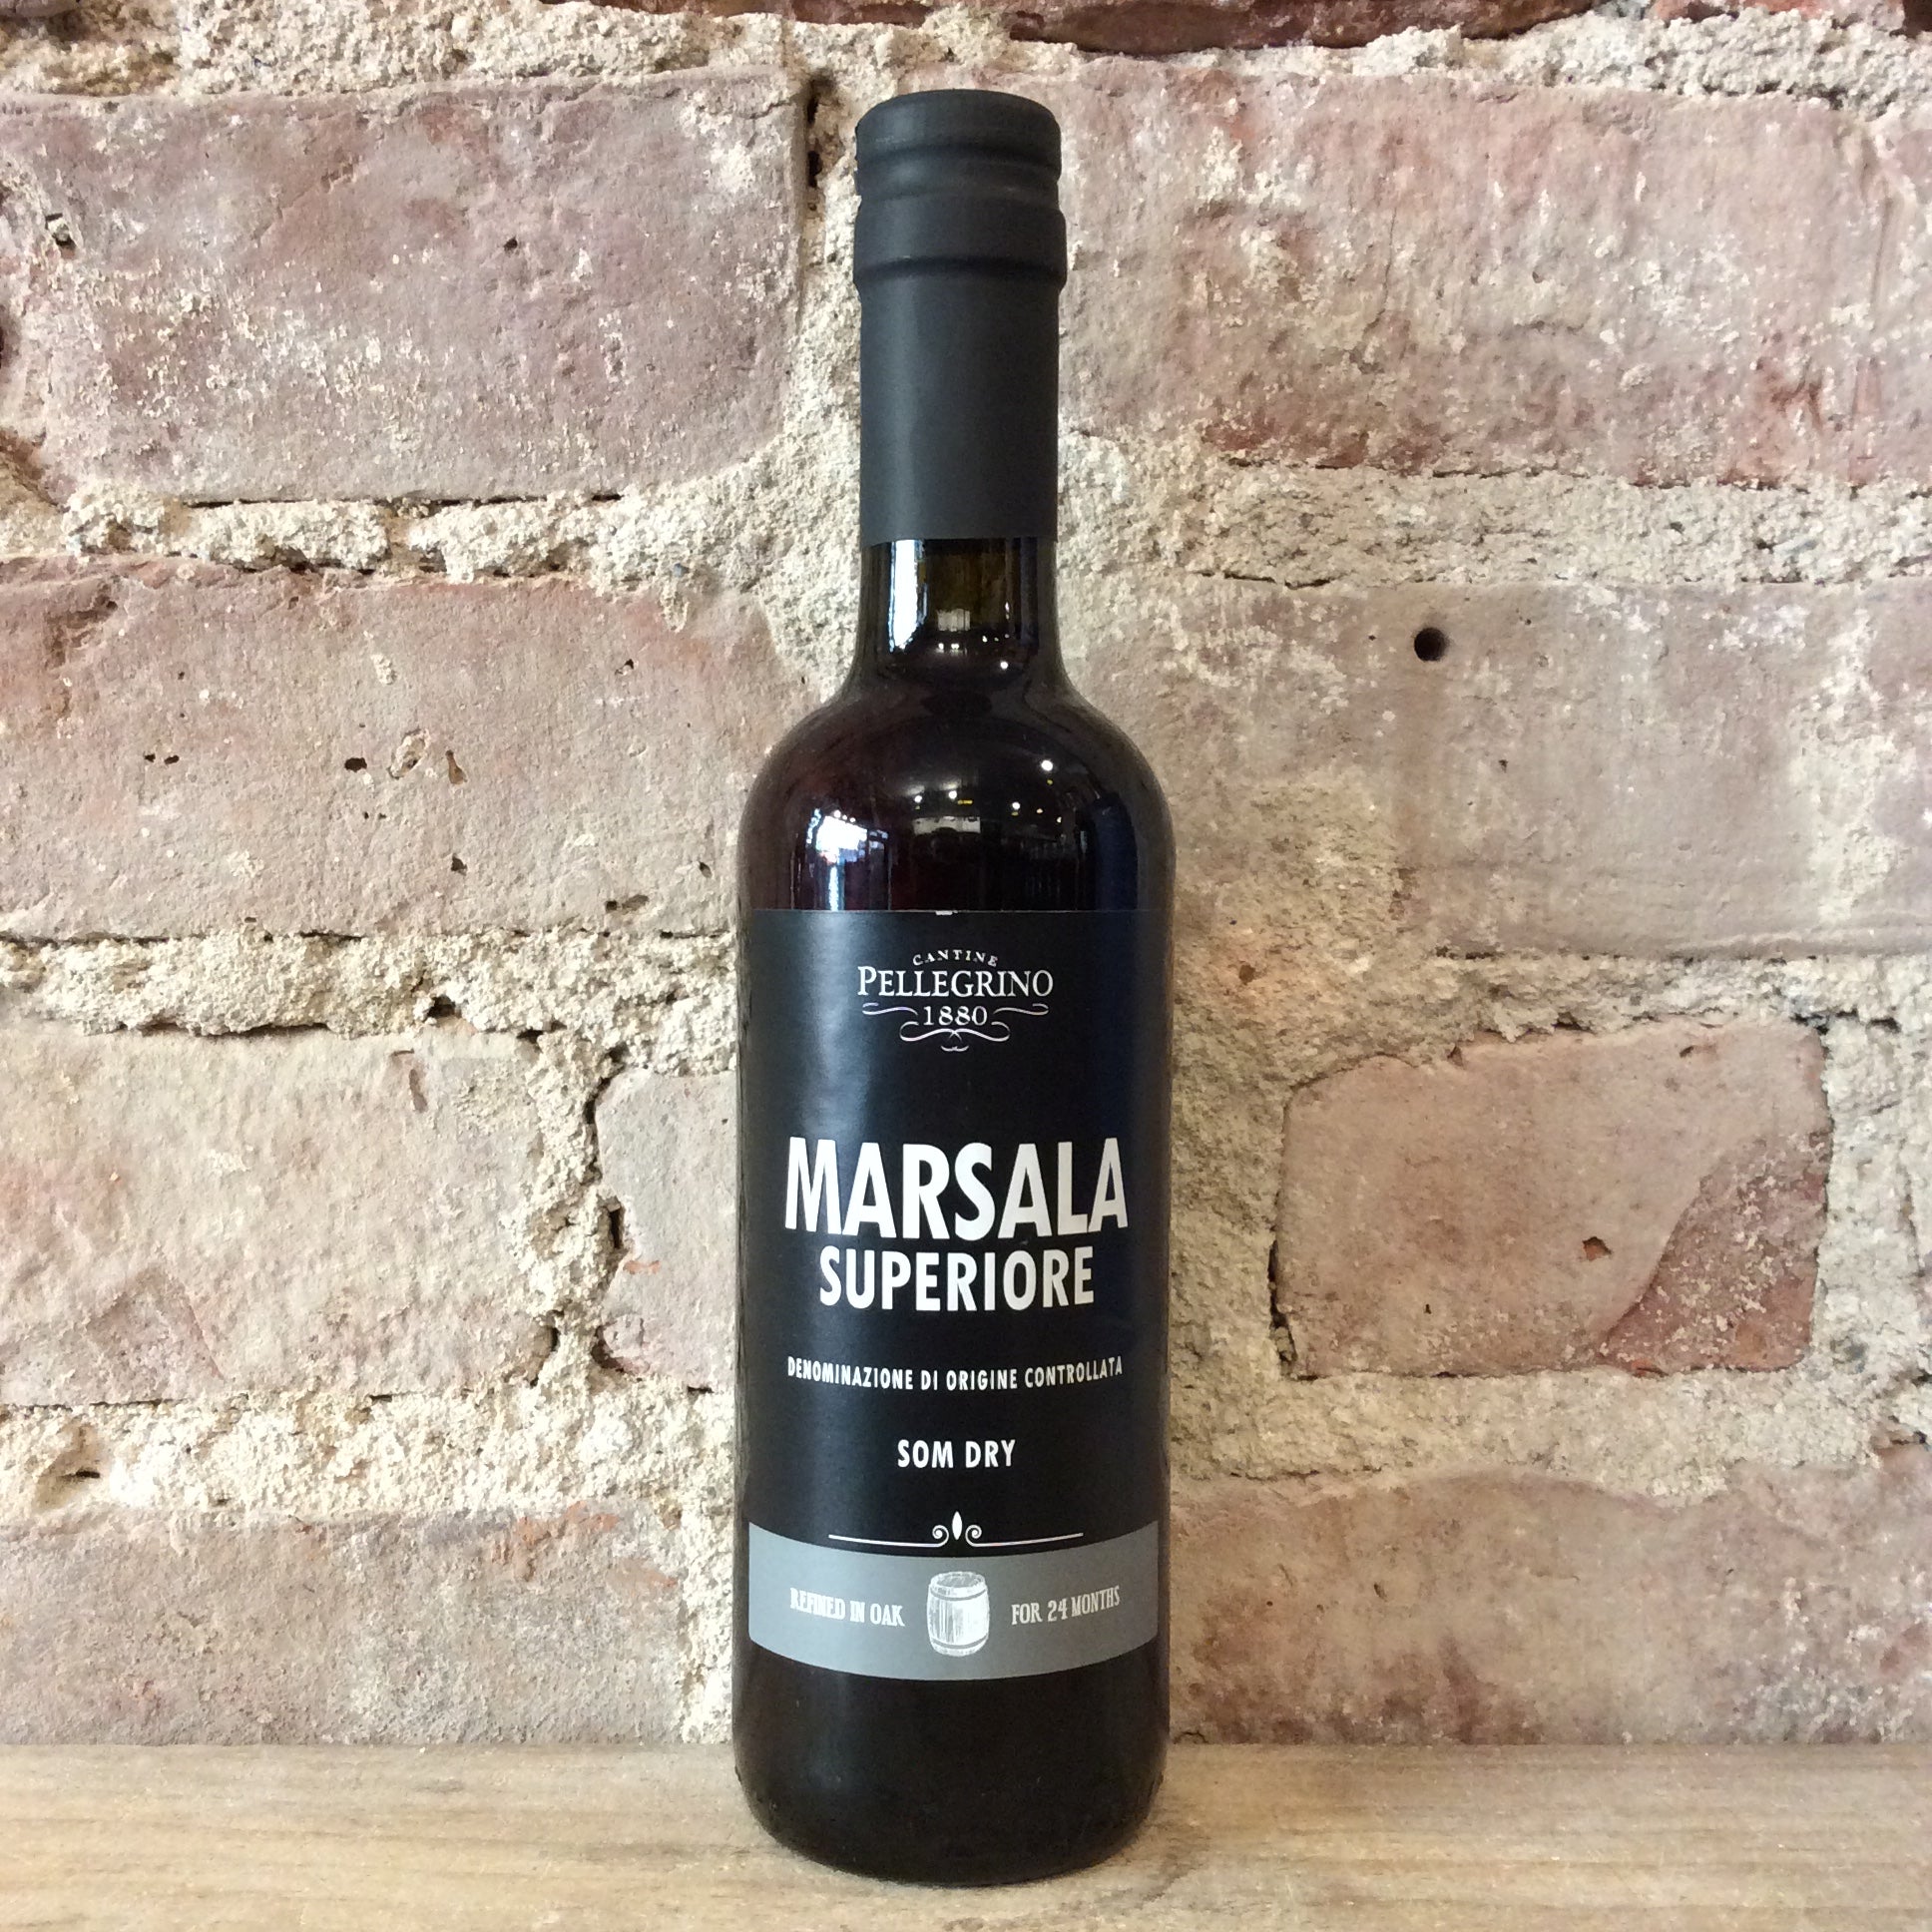 What Is Marsala Wine?